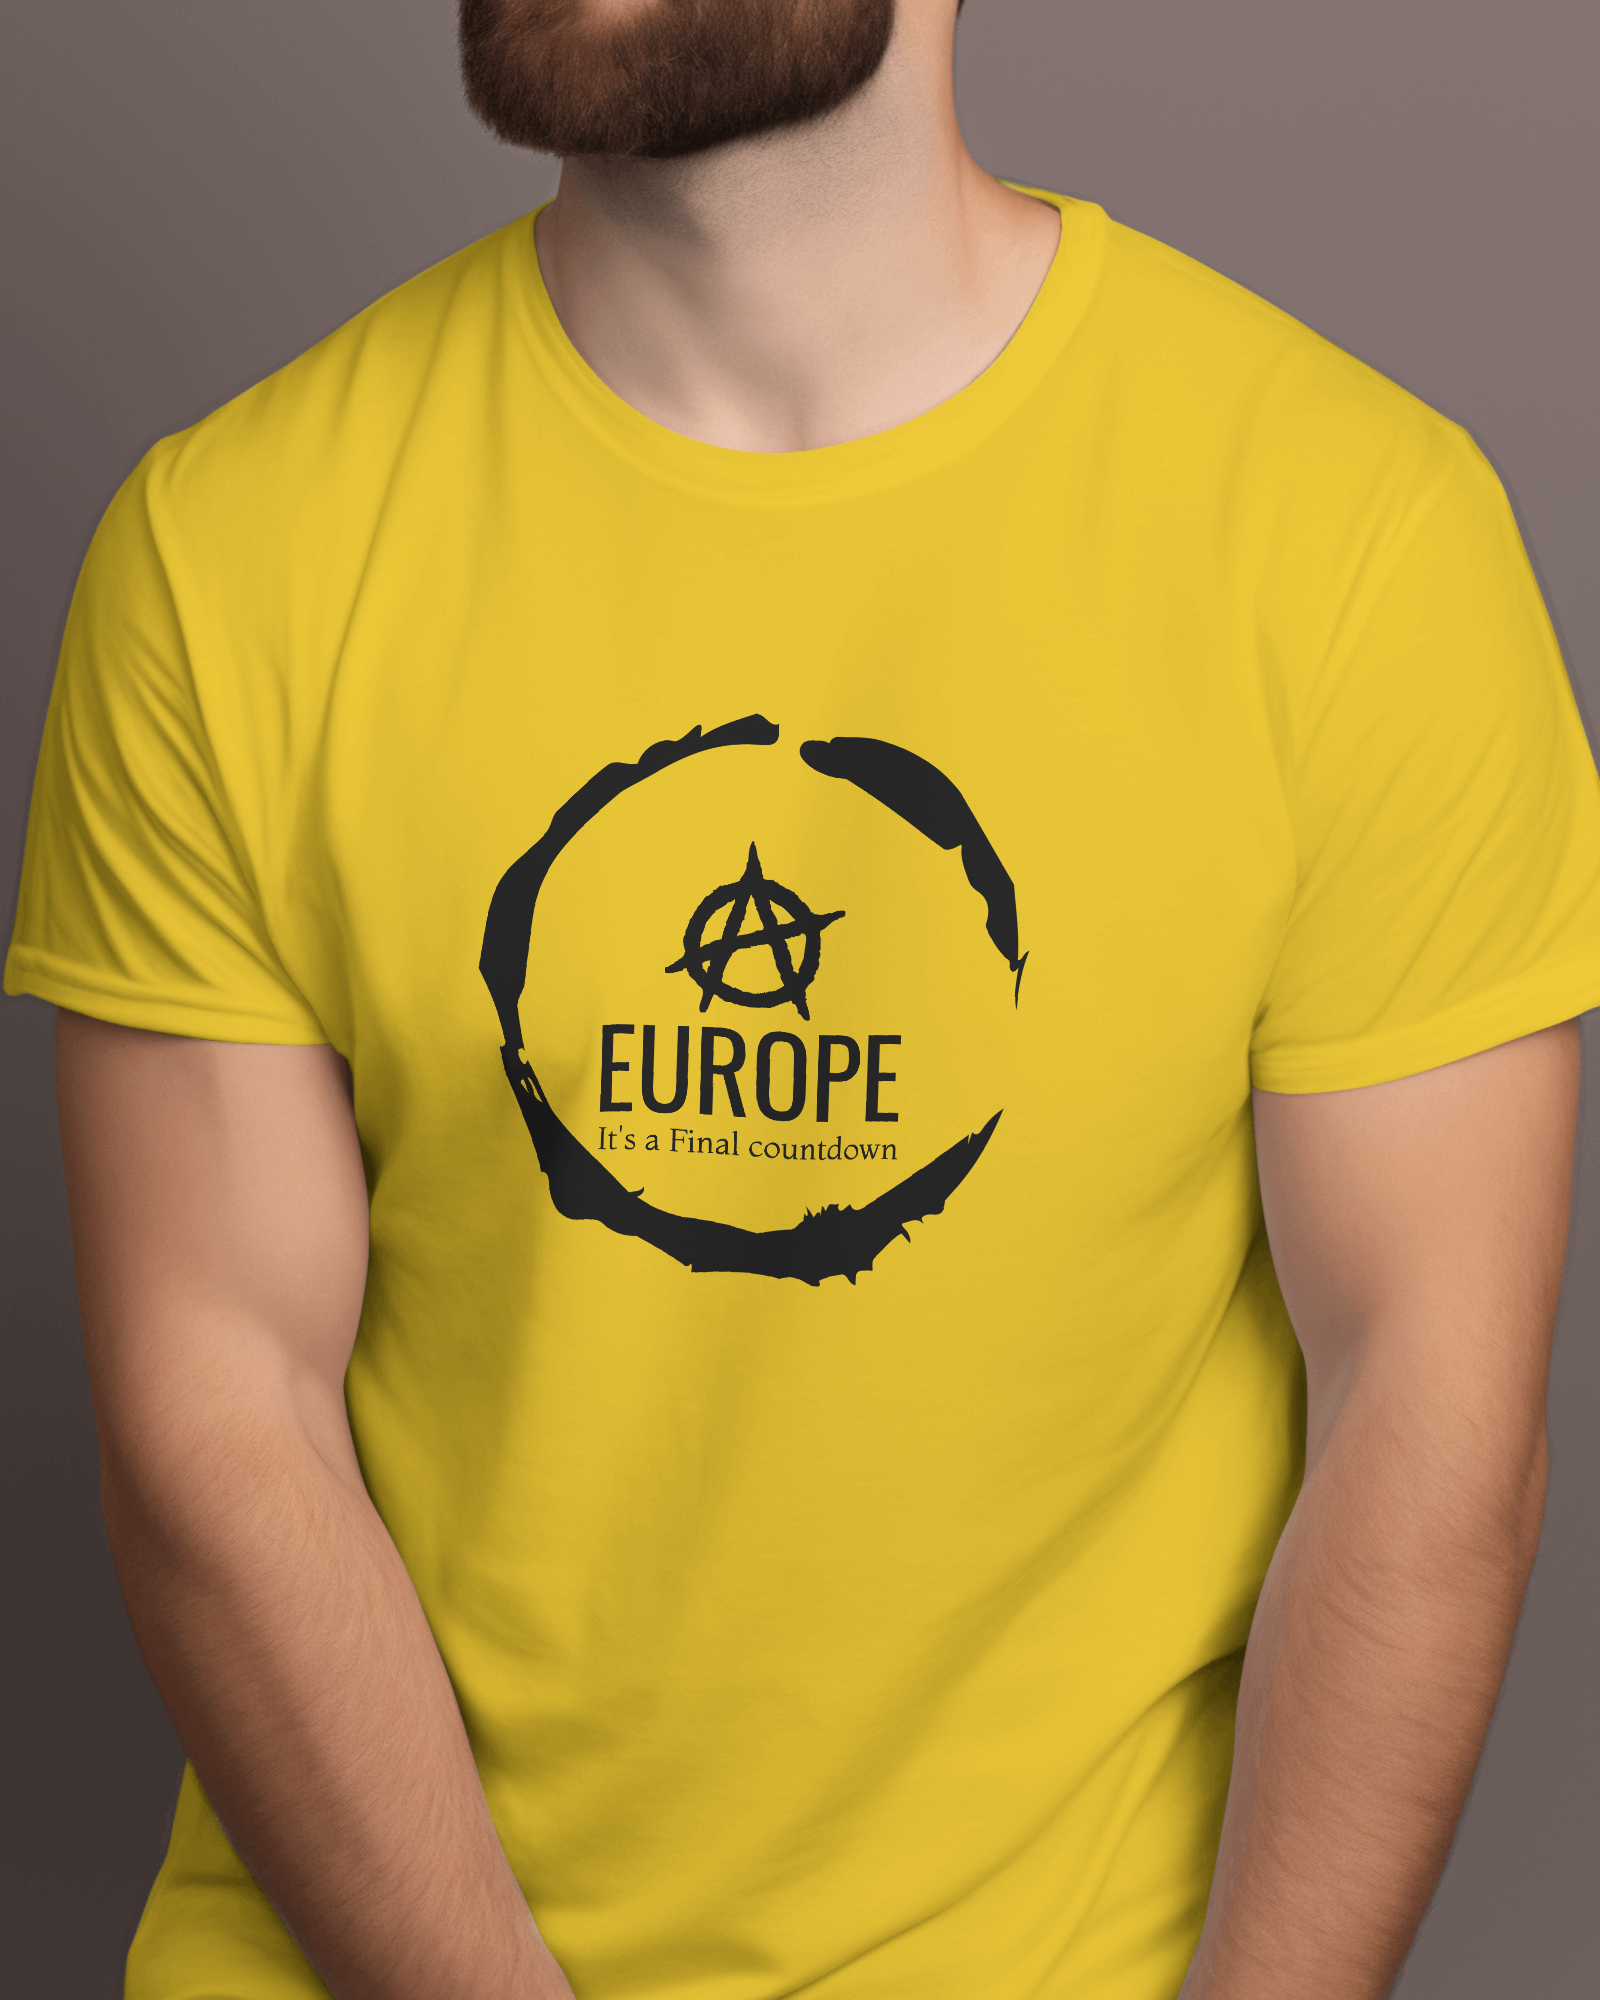 Europe Band Printed Tshirt For Men